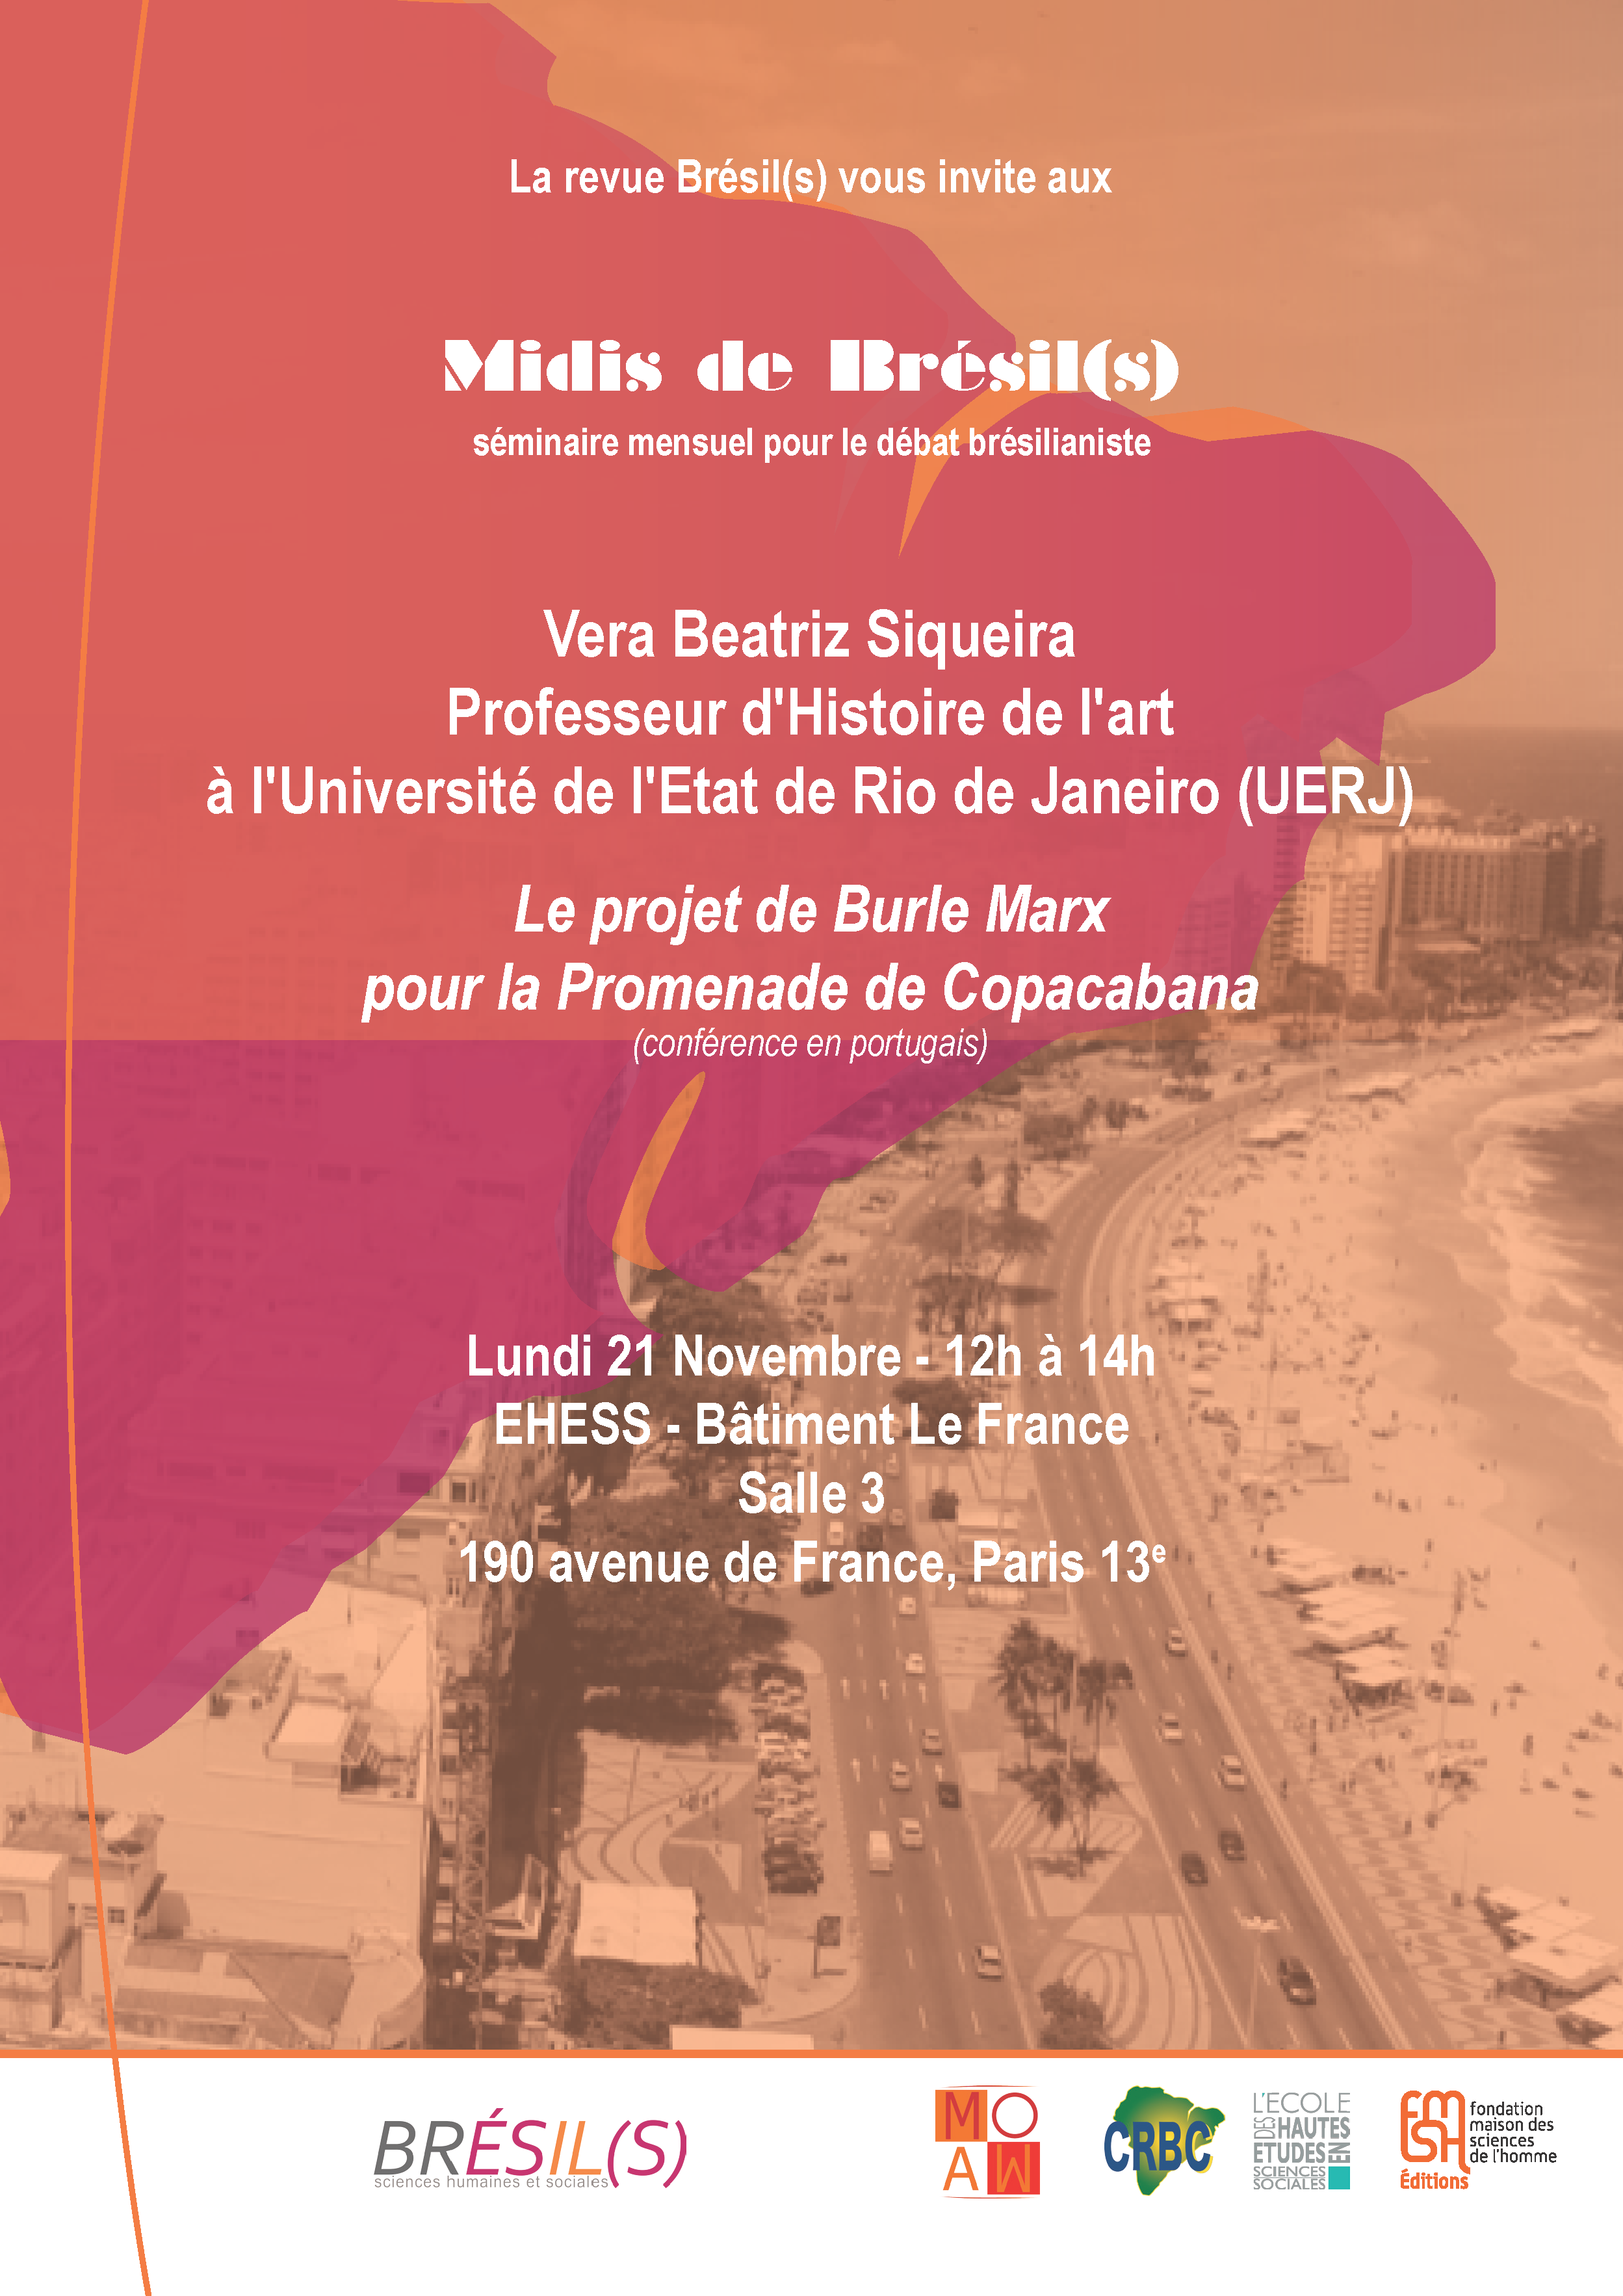 Les Midis de Brésil(s) – Vera Beatriz Siqueira (UERJ)